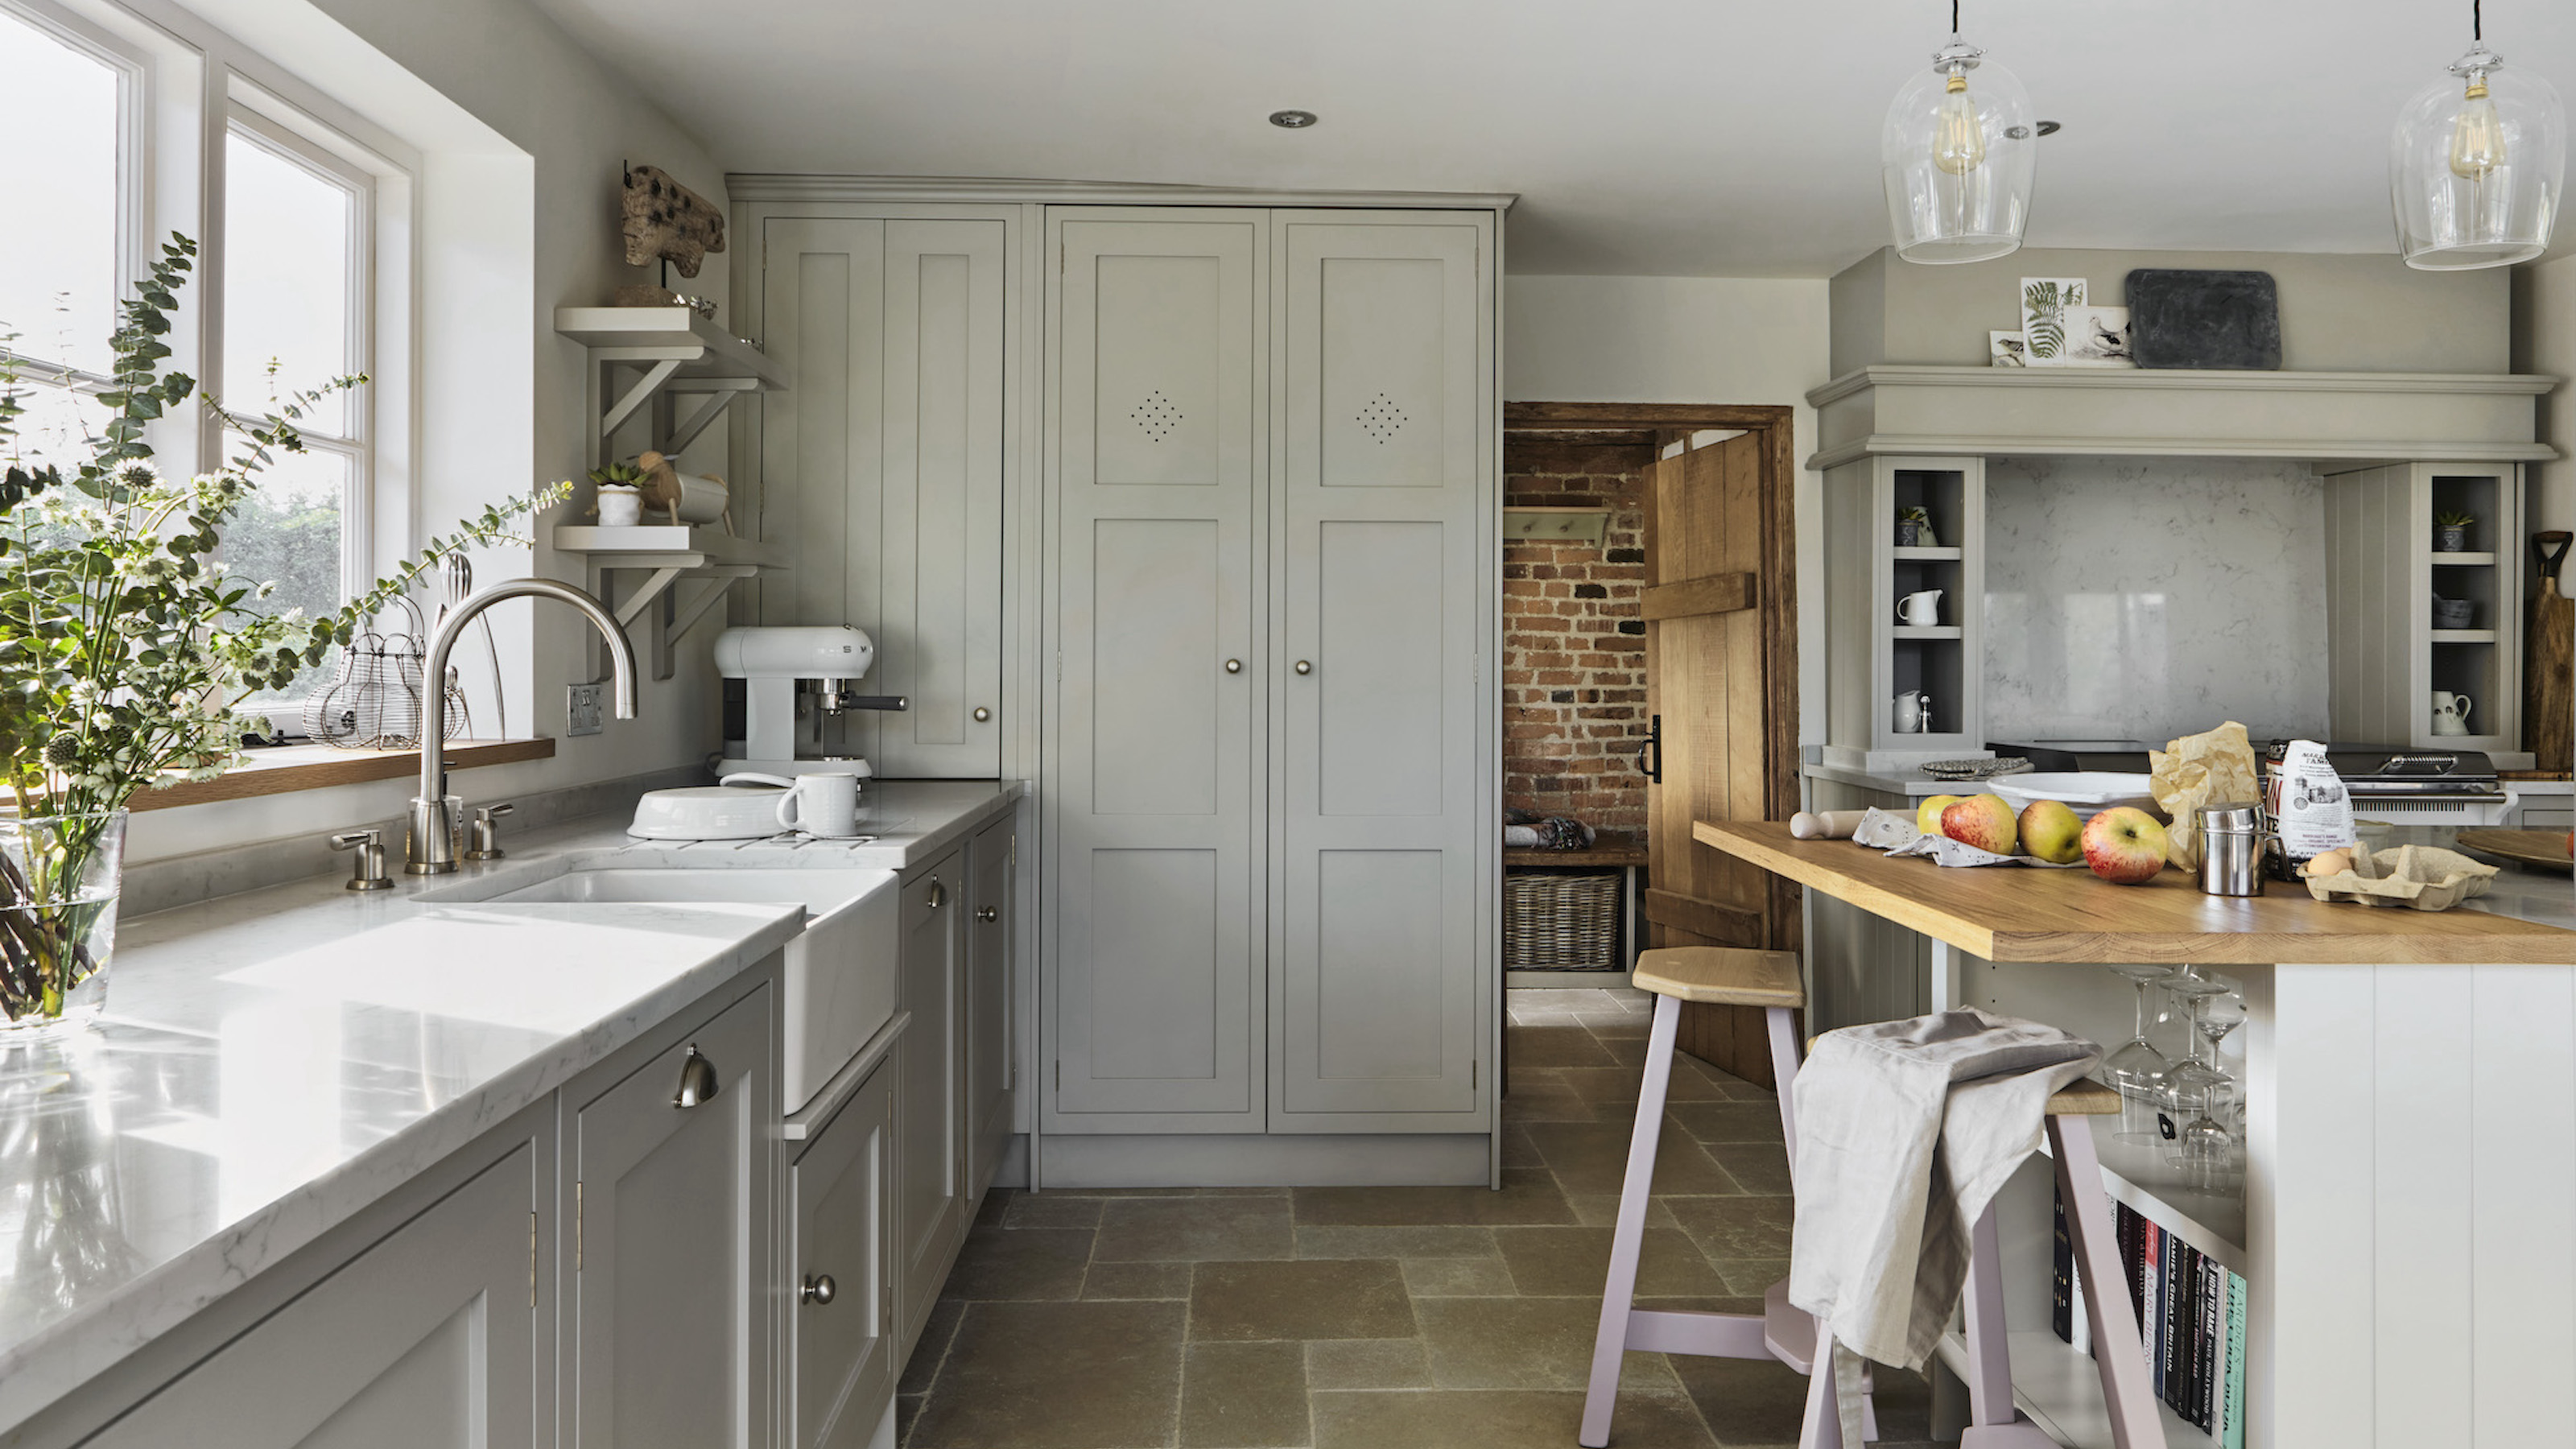 Cottage kitchen ideas 18 pretty ways to decorate homey spaces ...